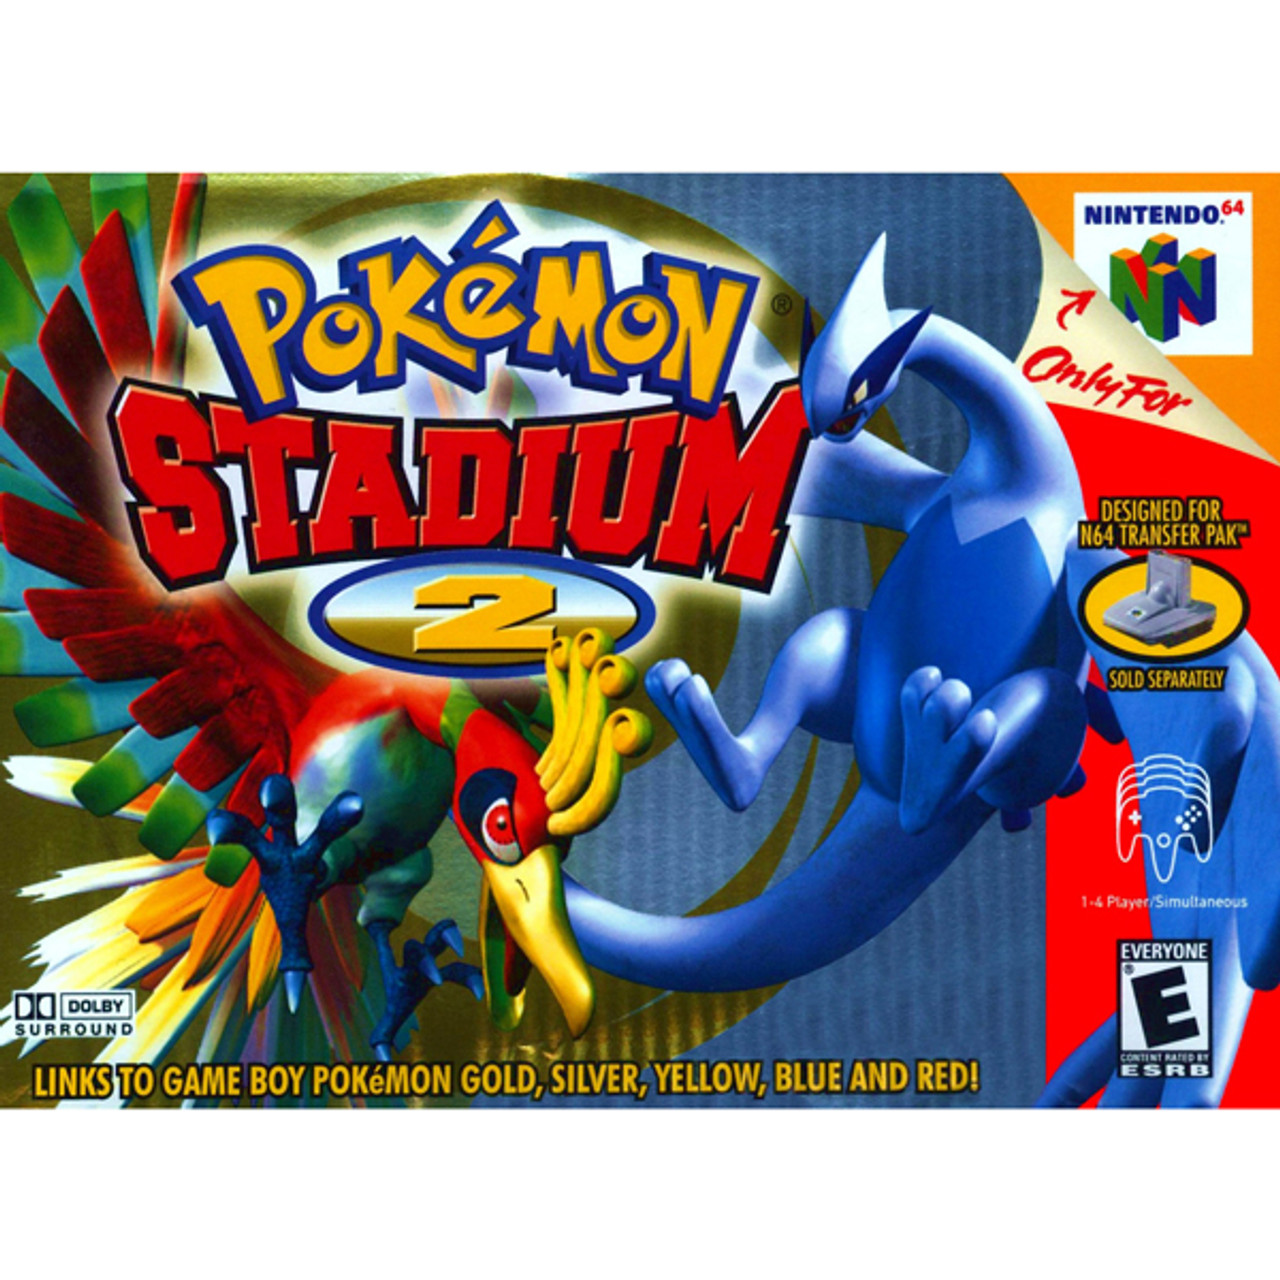 Pokémon Trading Card Game and Pokémon Stadium 2 Arrive on Nintendo